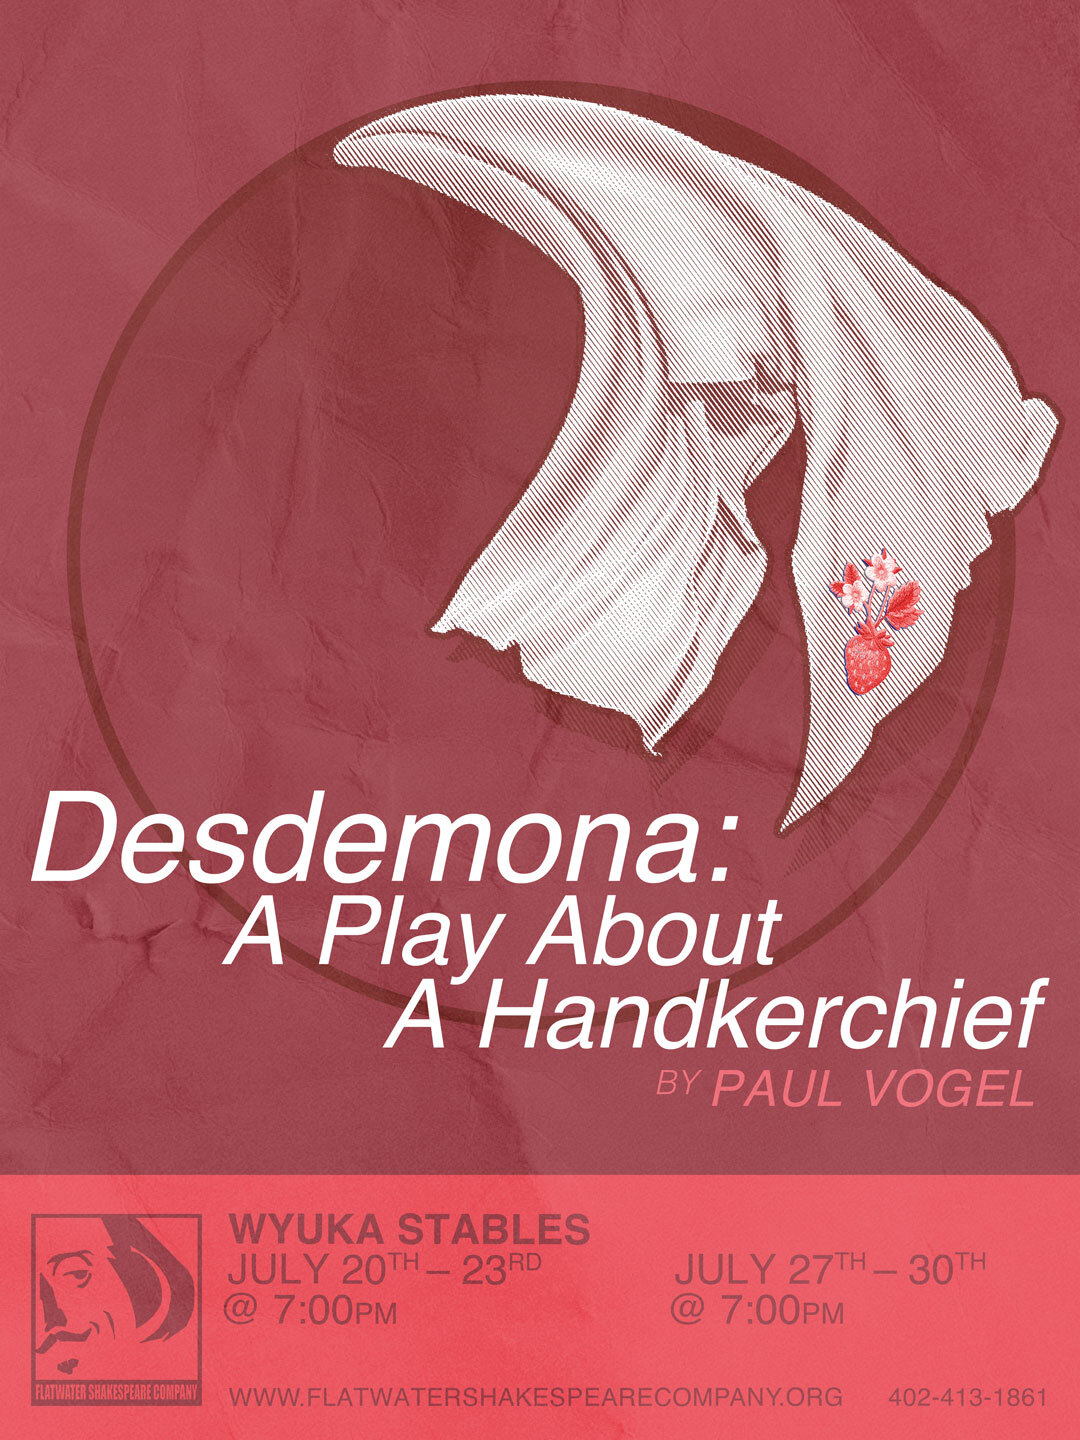 7/23 SEN - SENIOR (65+): Sun. July 23, 2023 | 7:00 p.m. - 10:00 p.m. CST | Wyuka Stables (Desdemona: A Play about a Handkerchief)